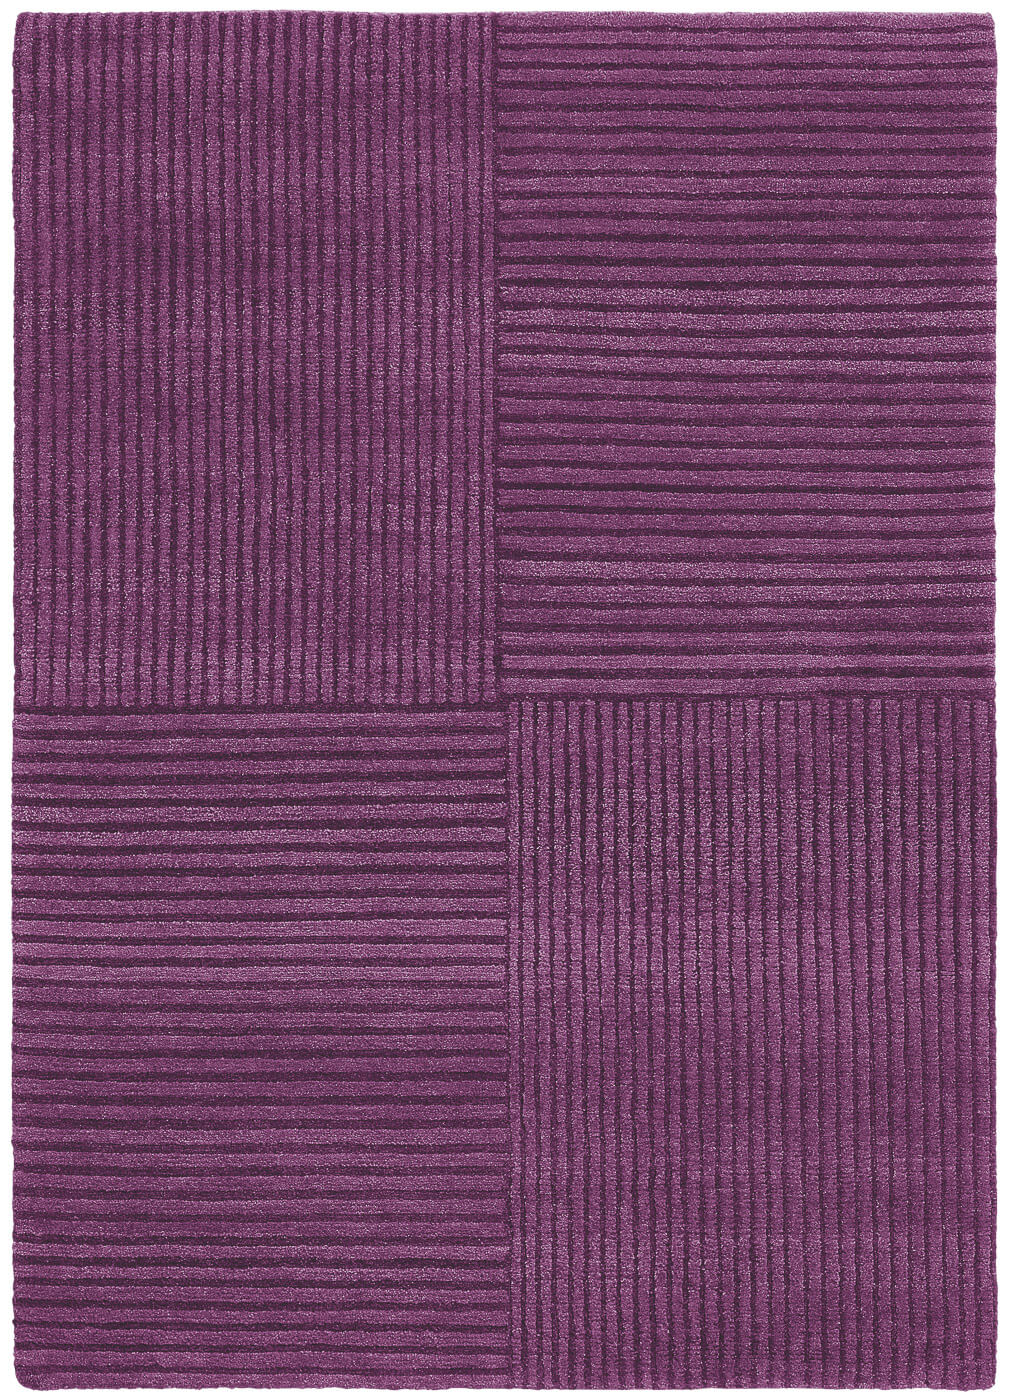 Элитный германский ковер Gamba Vario 1 пурпурный